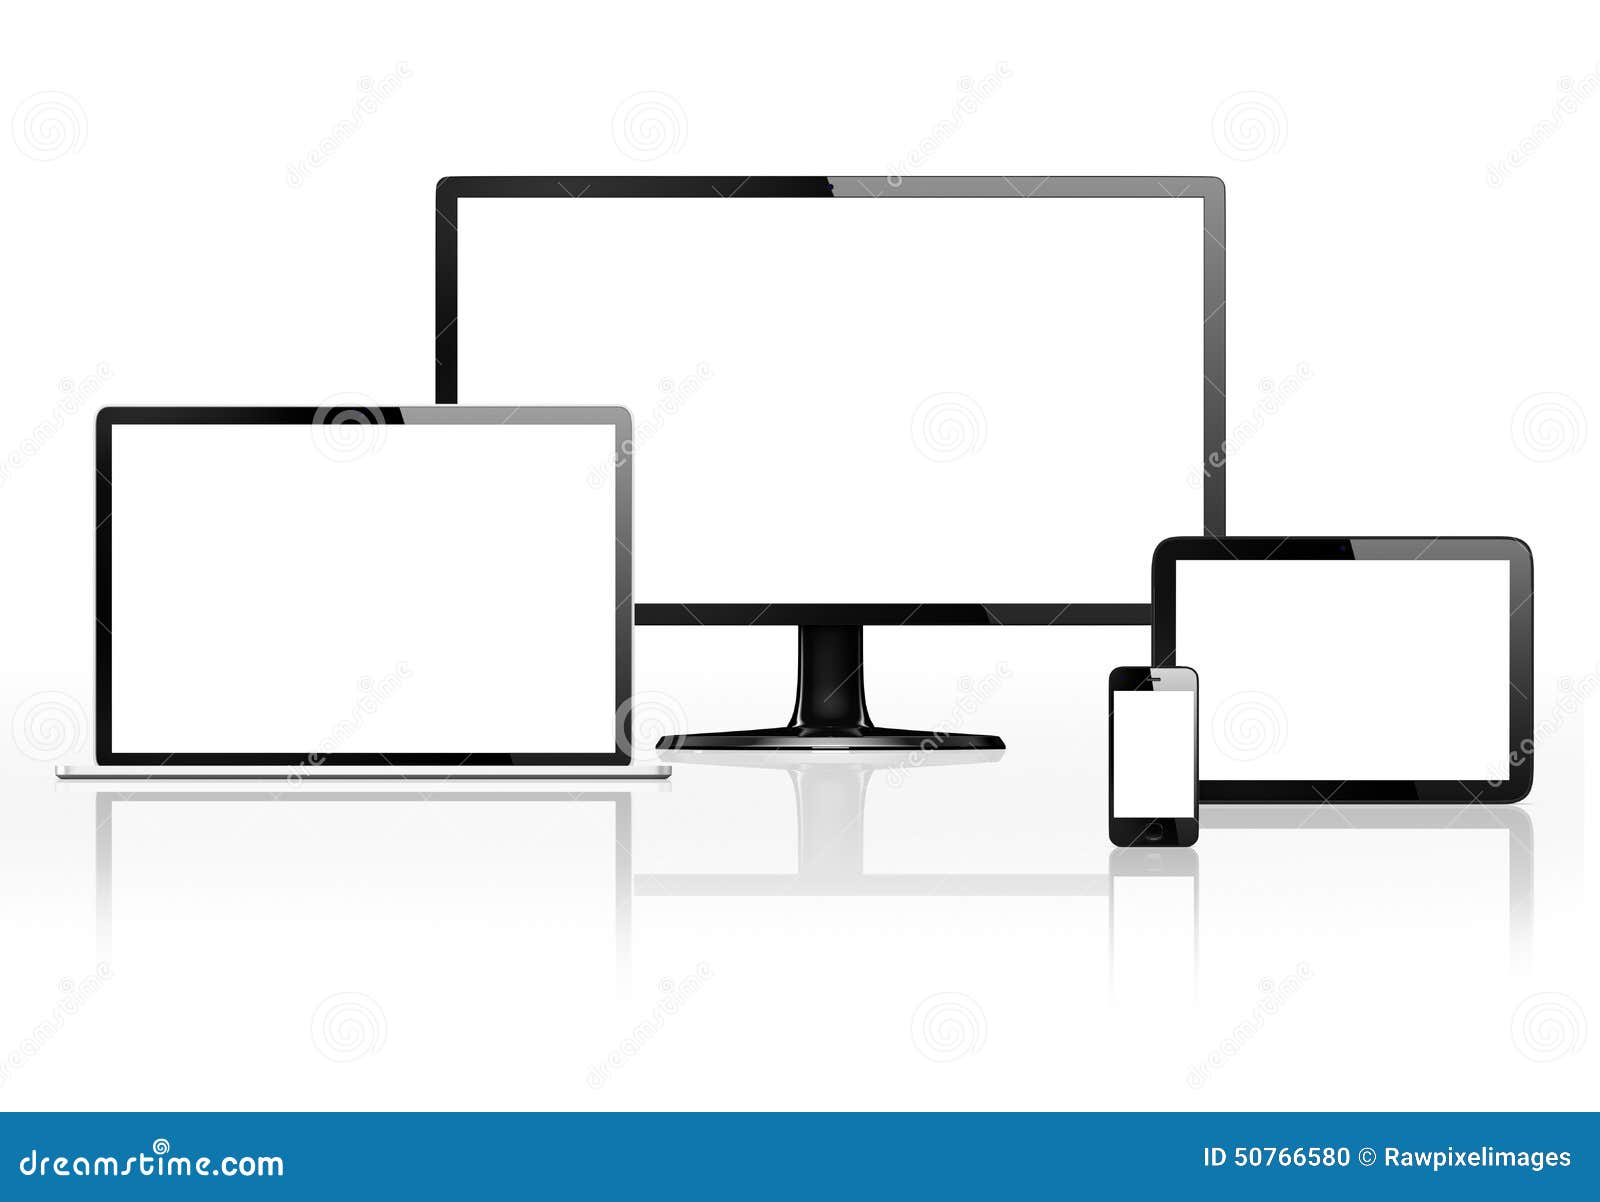 communication devices digital online internet concept